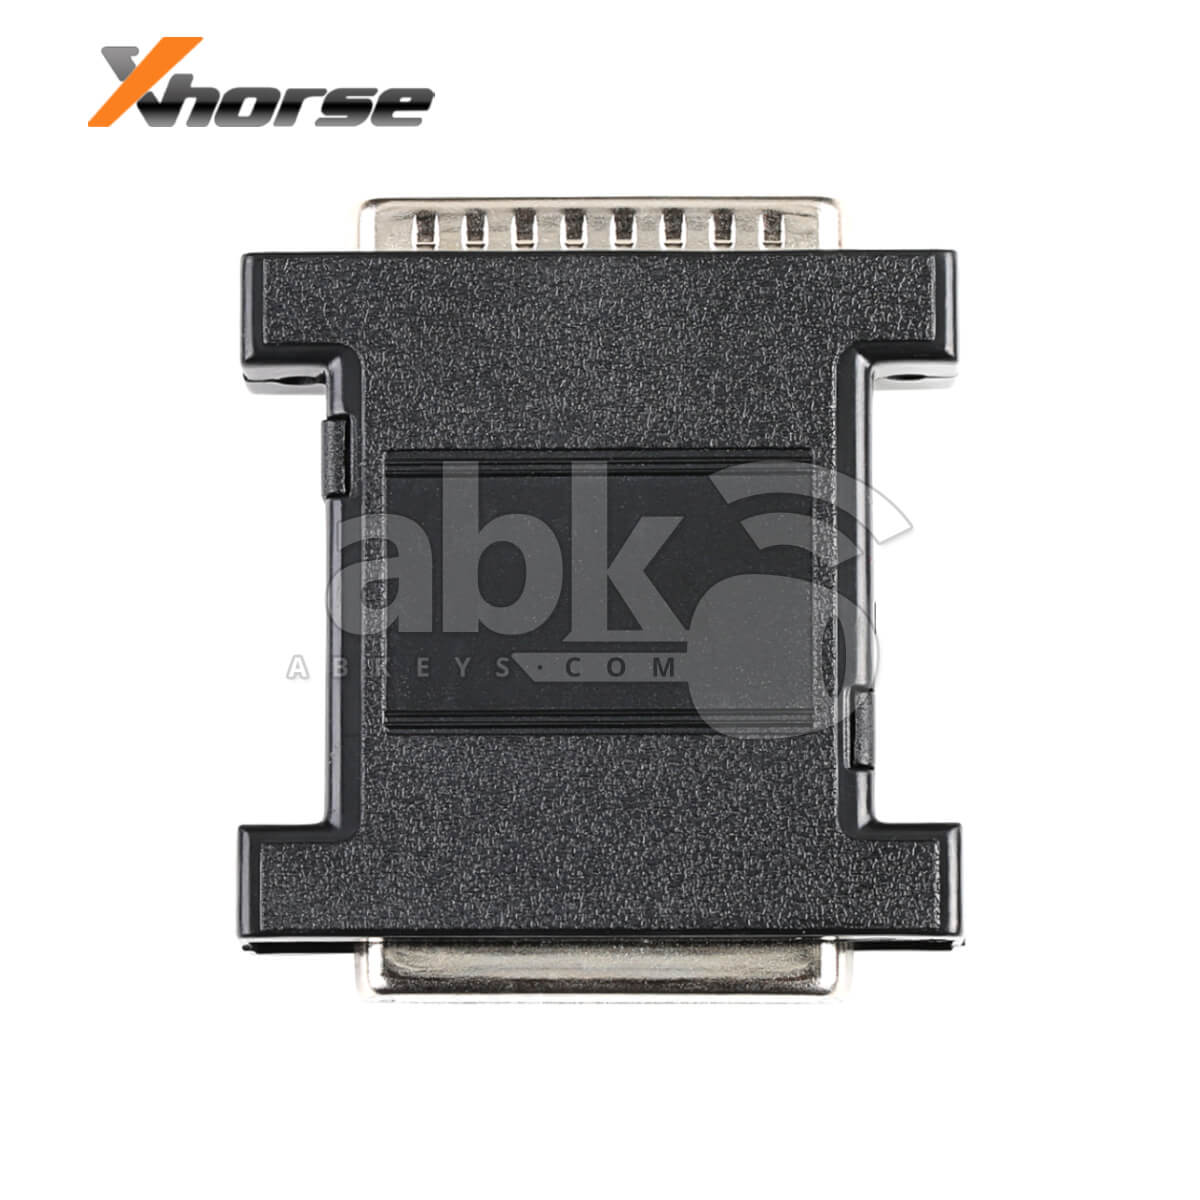 Xhorse Mercedes Benz Power Adapter for VVDI Key Tool Plus XDKP24 XDKP24GL - ABK-3932 - ABKEYS.COM